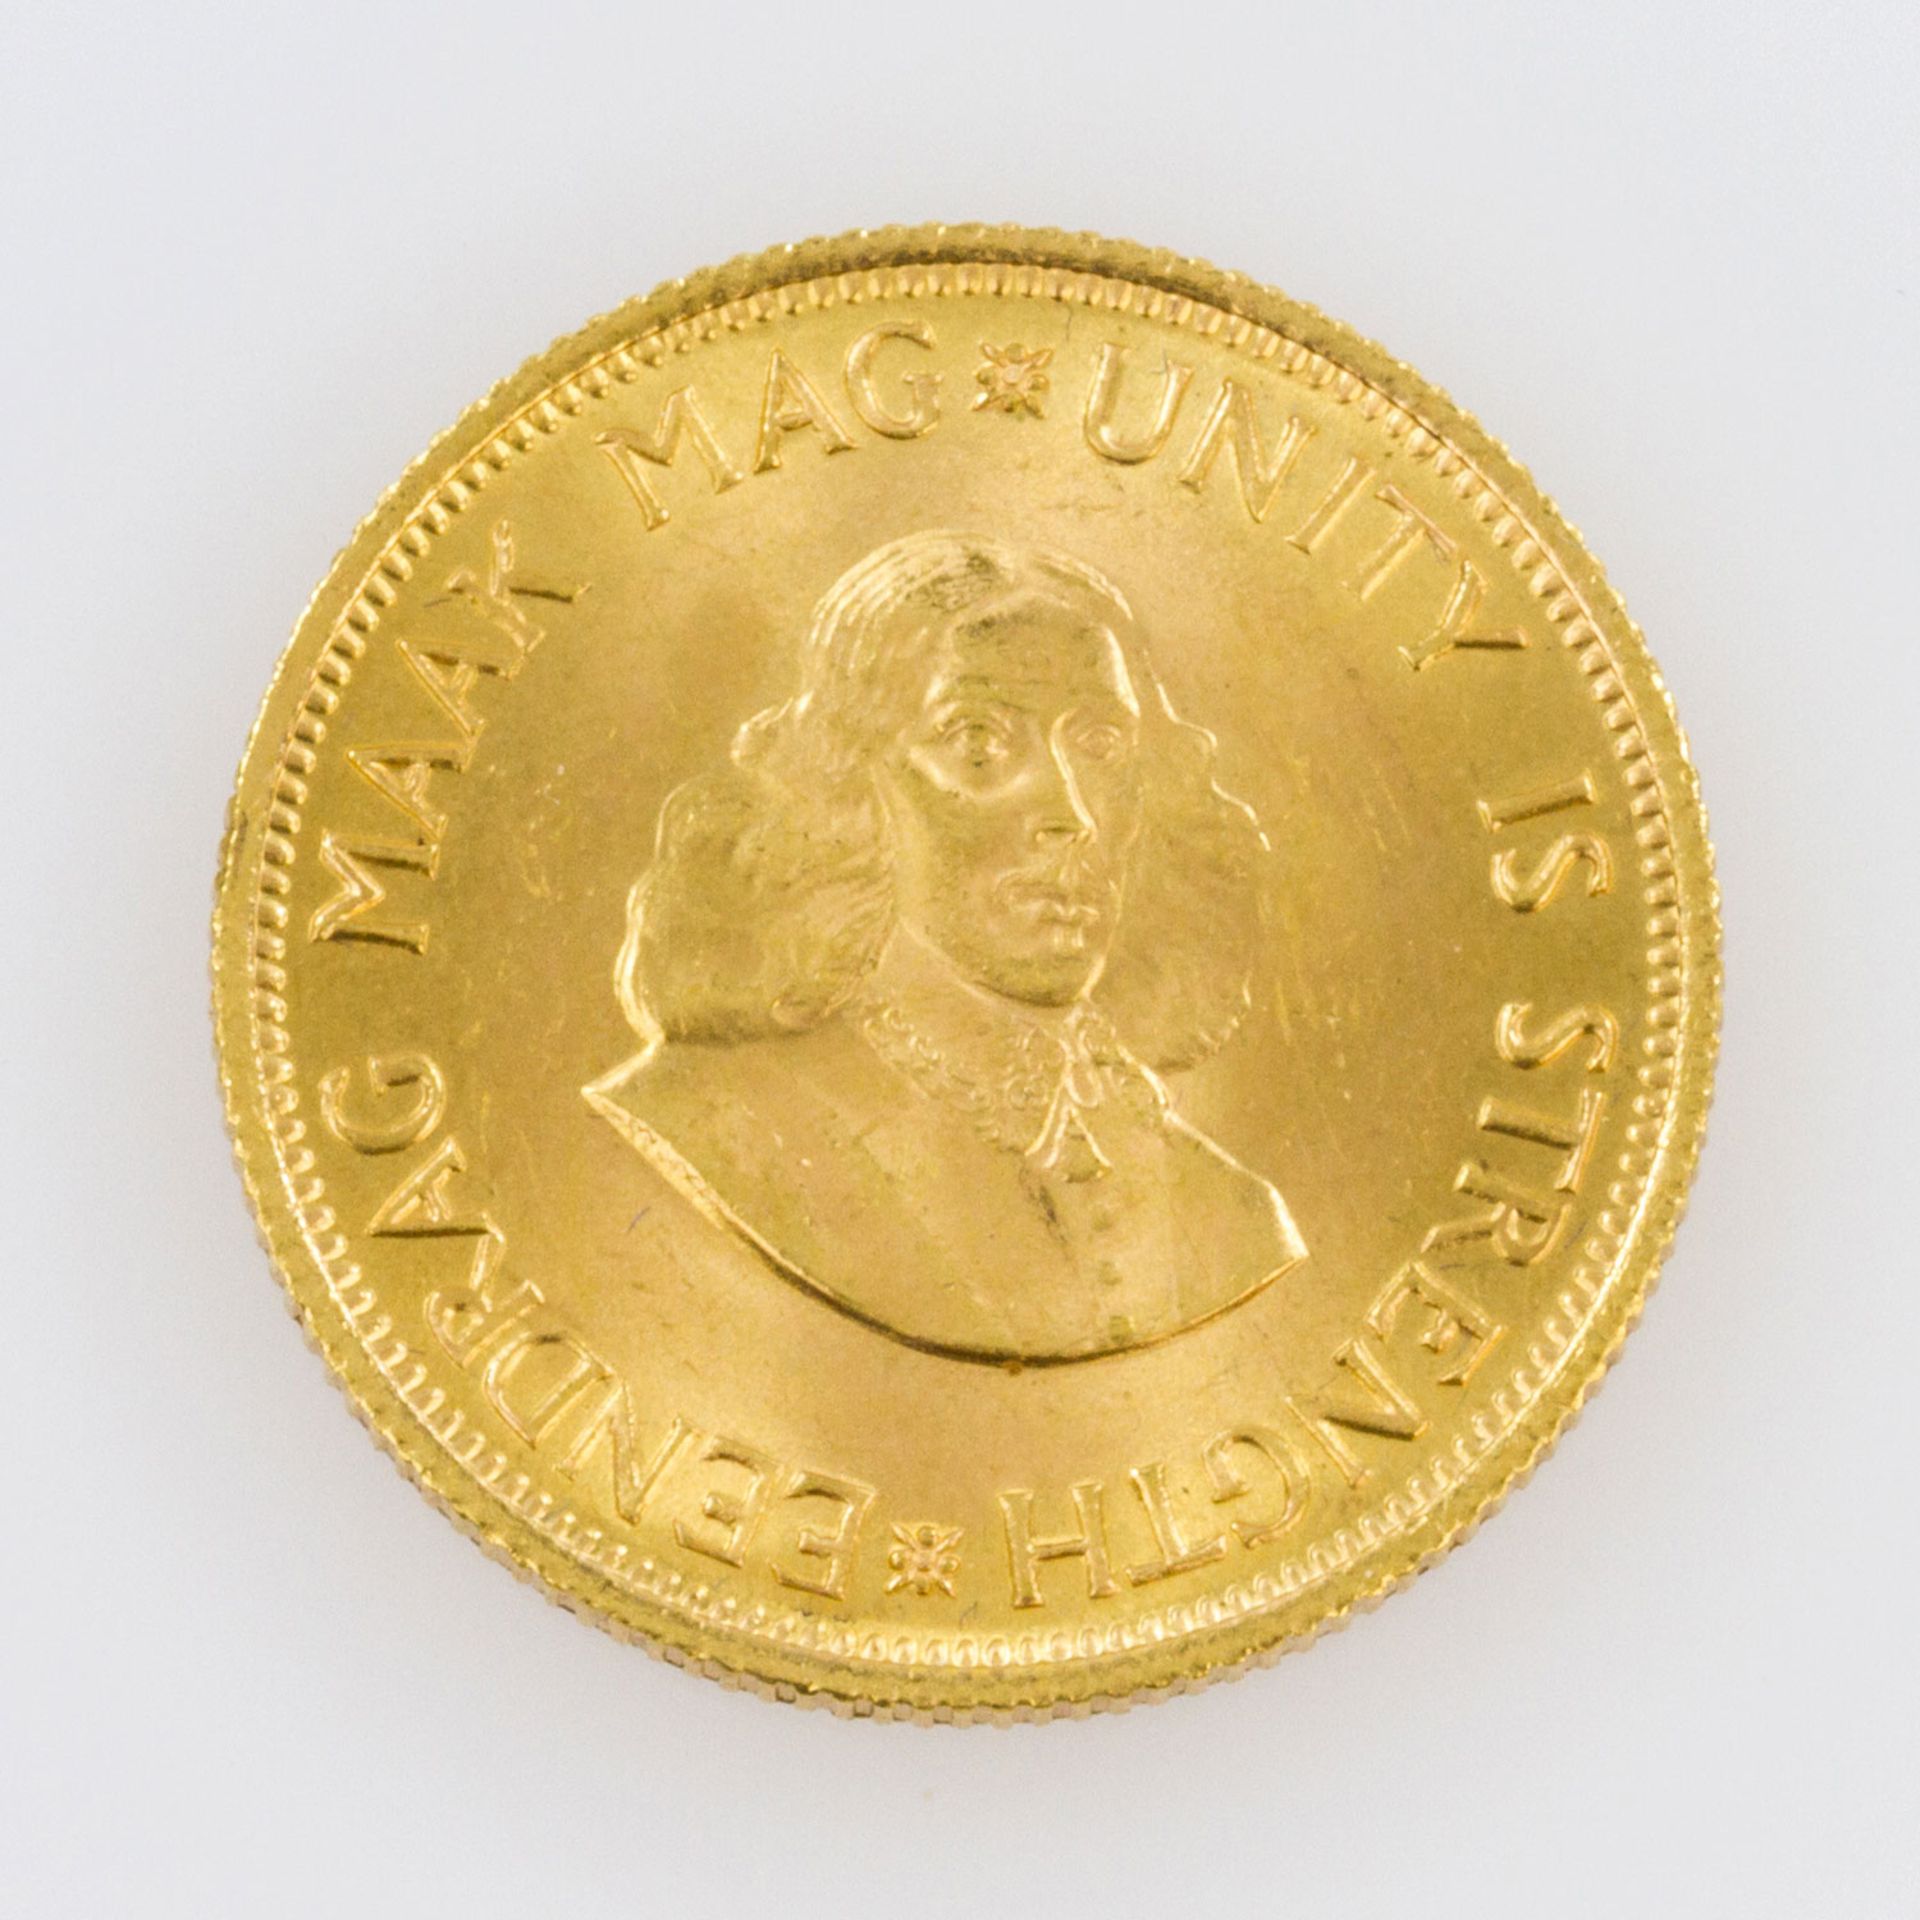 Südafrika/GOLD - 2 Rand 1962, ca. 7,32 g fein, ss